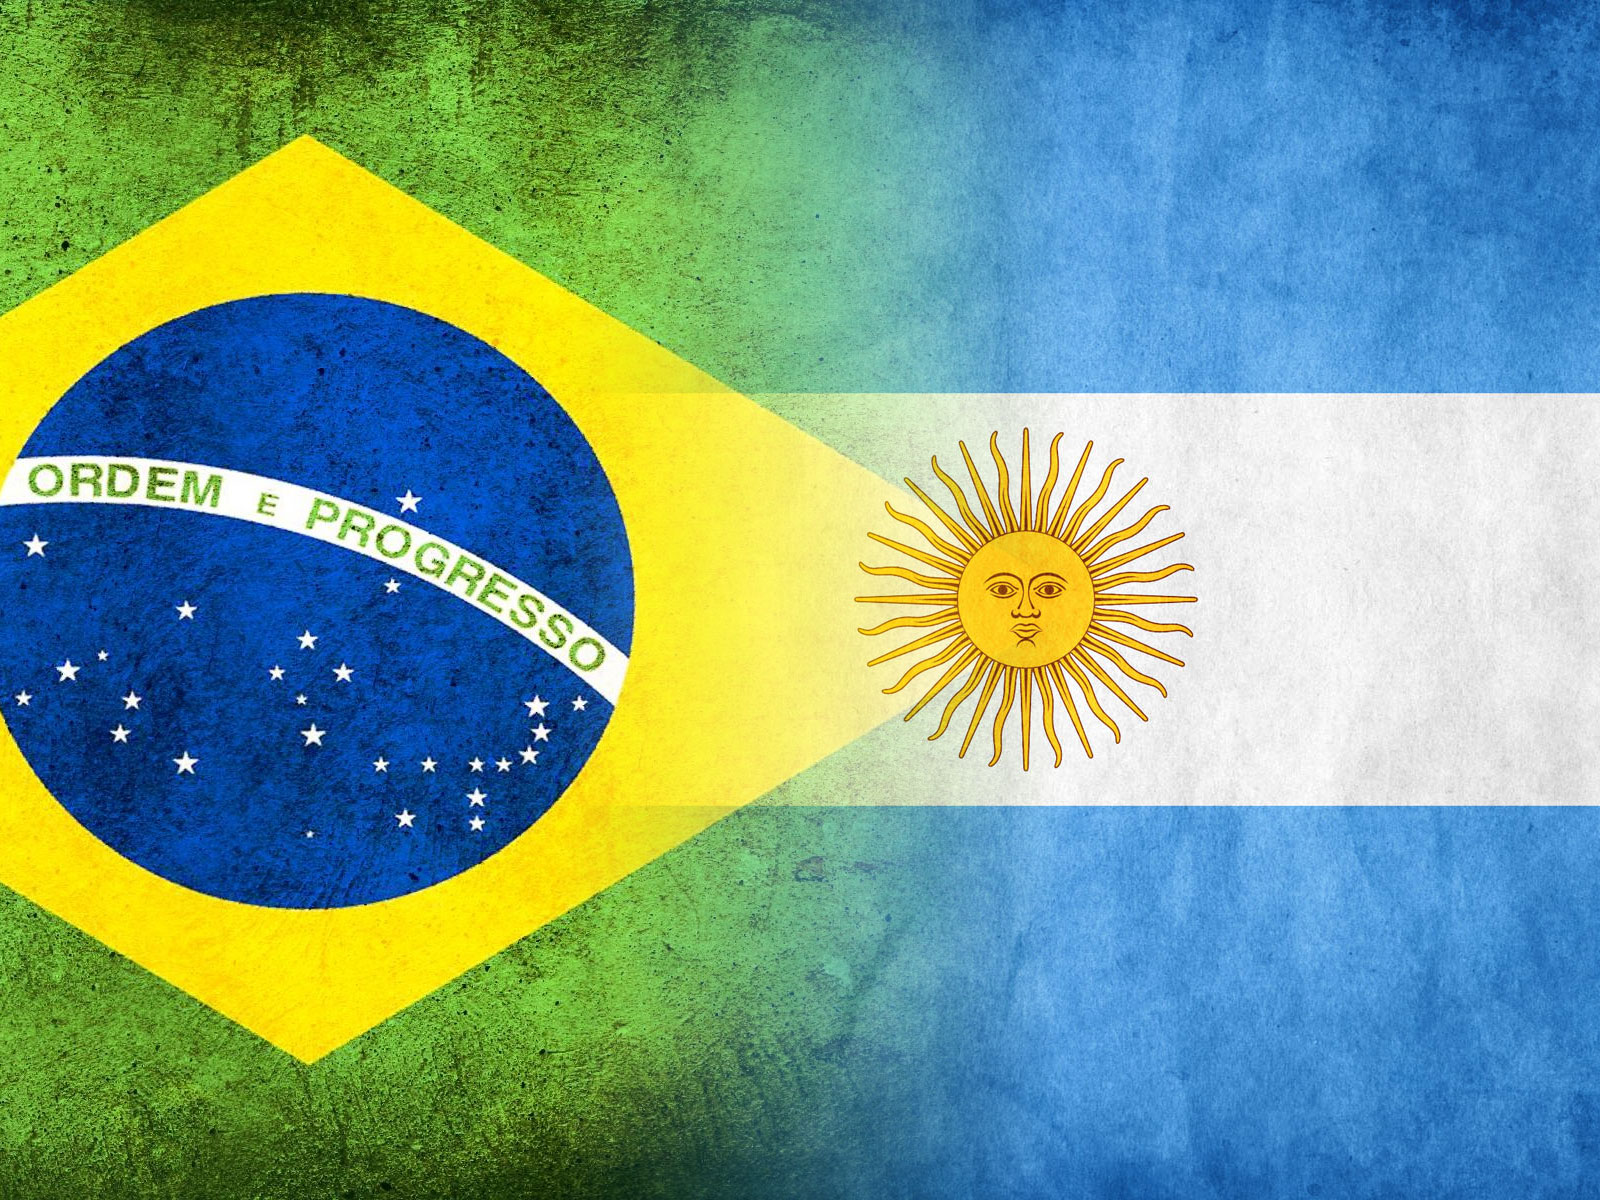 brasil x argentina